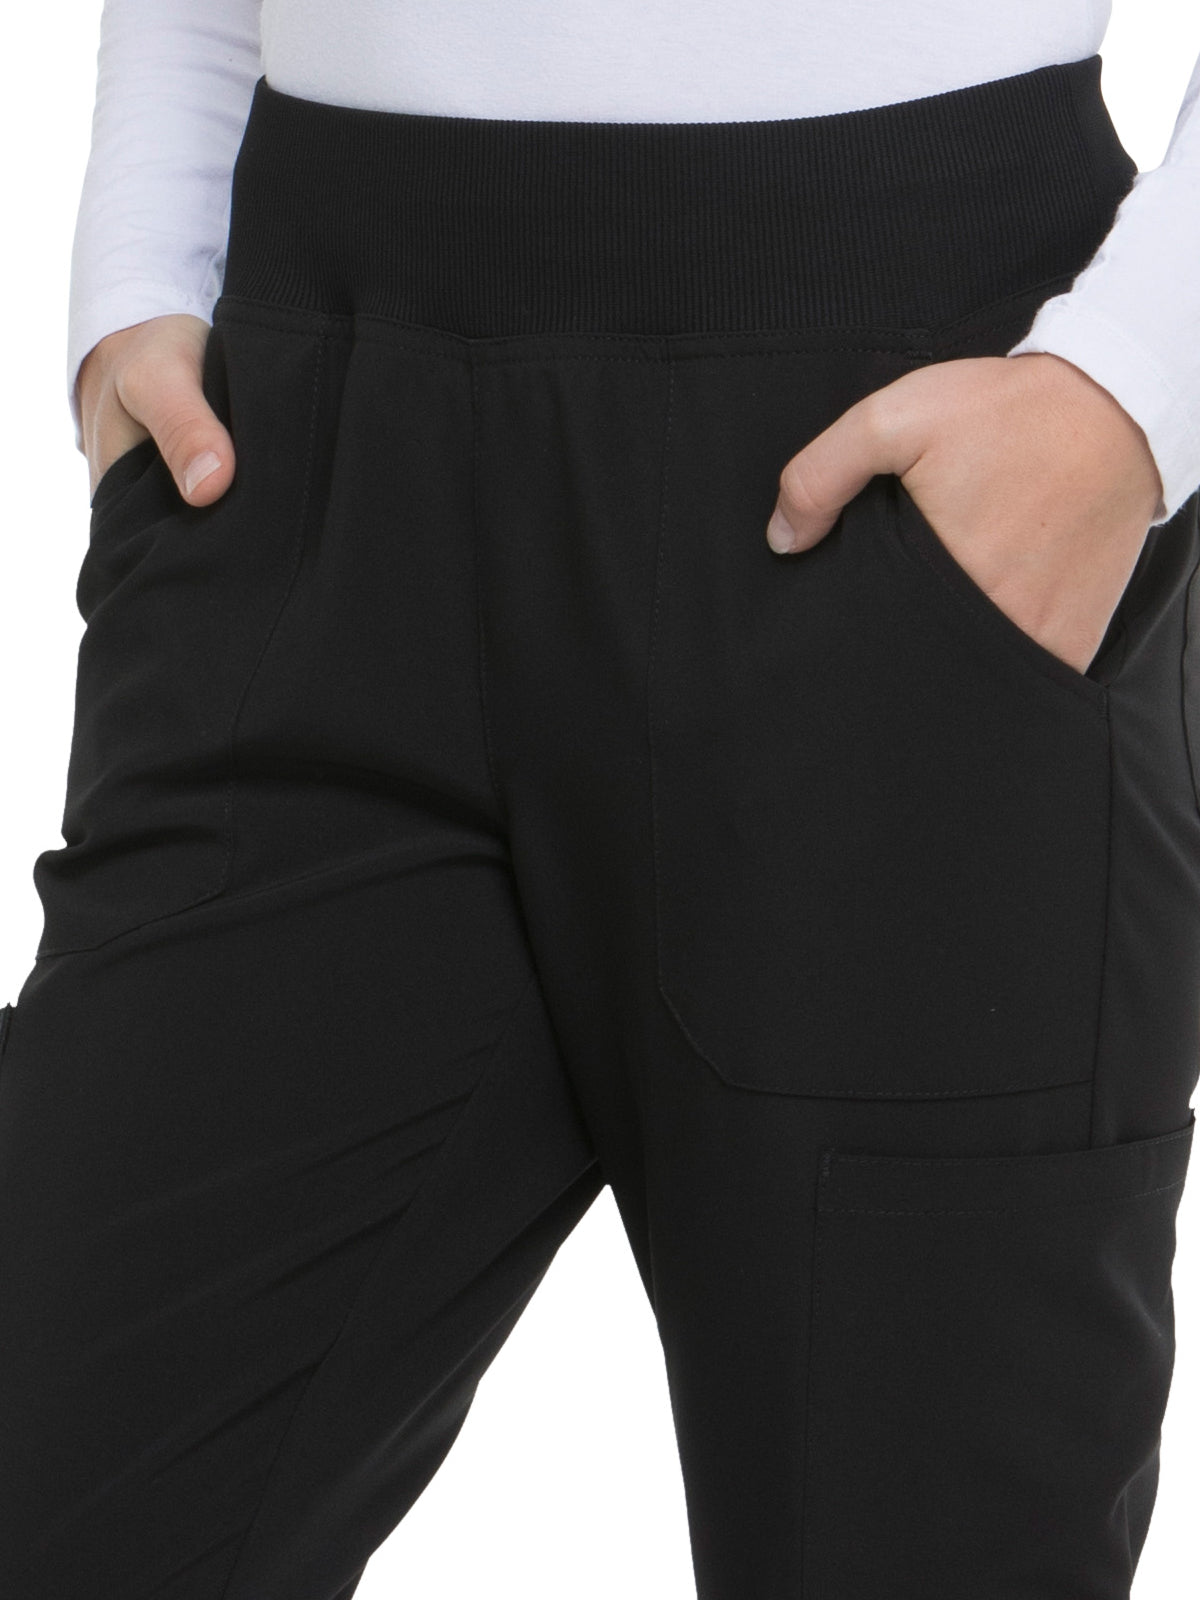 Women's Natural Rise Tapered Leg Pull-On Pant - DK005 - Black